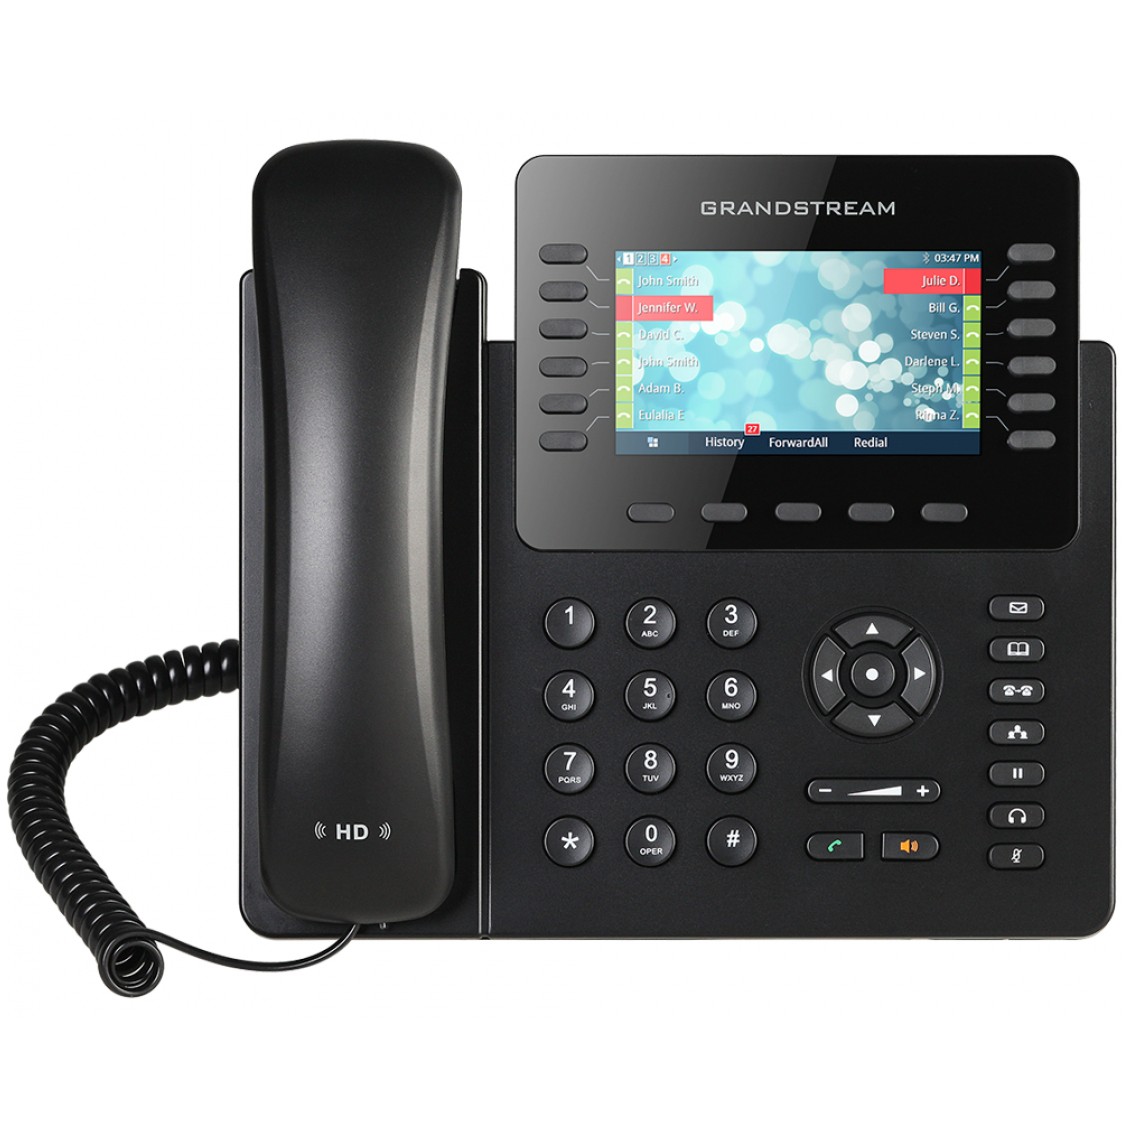 GRANDSTREAM GXP-2170 SIP Telefon, HD Audio, papierloses Design